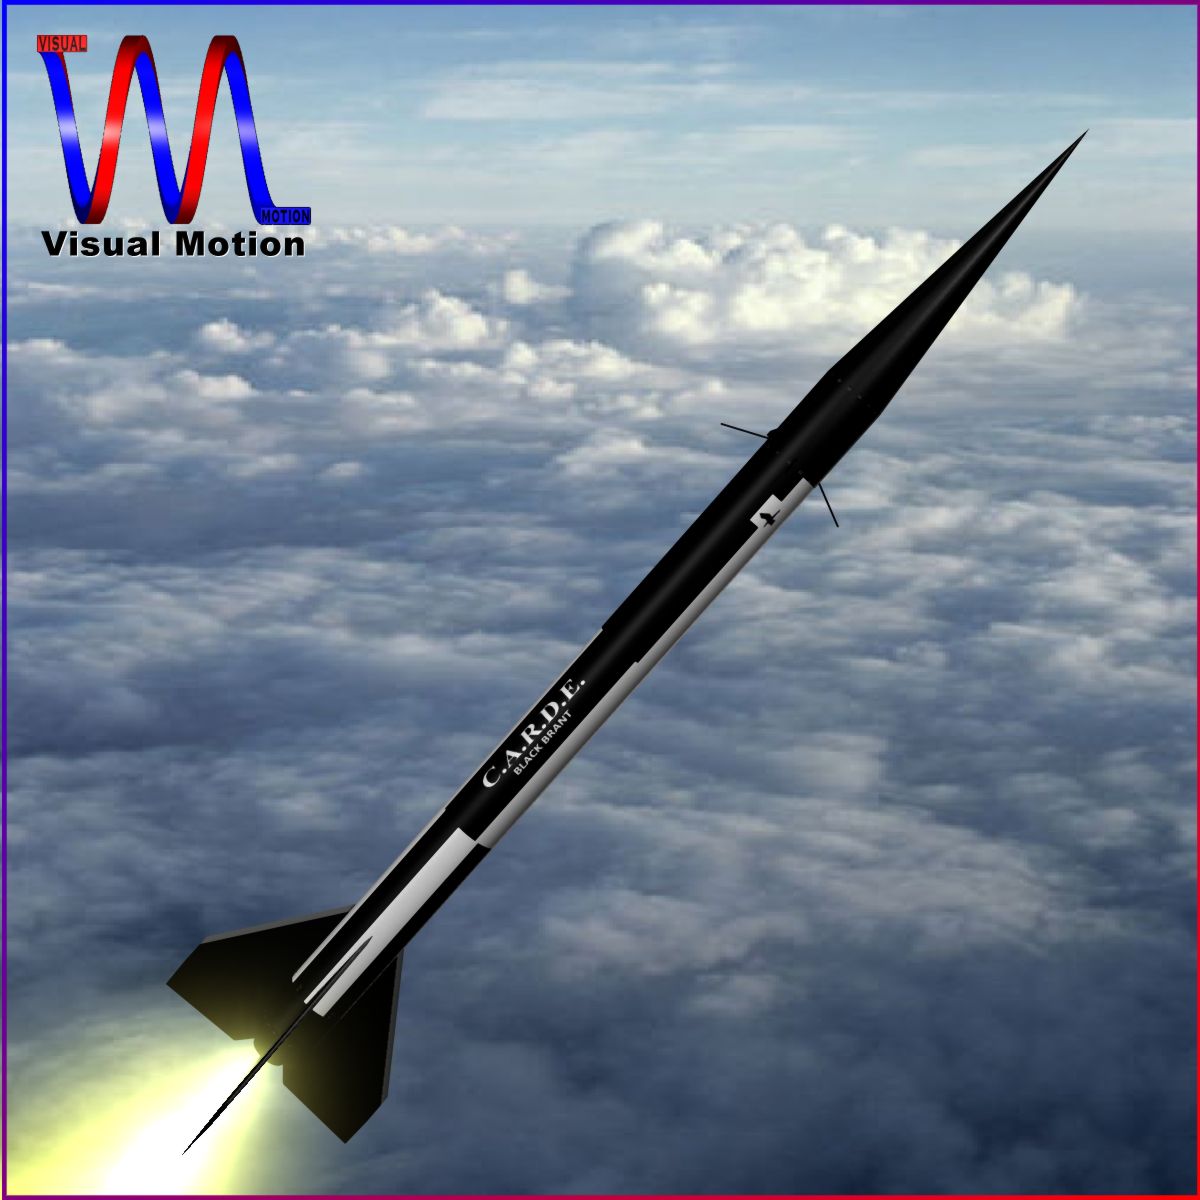 black brant ii sounding rocket 3d model 3ds dxf cob x obj 150832